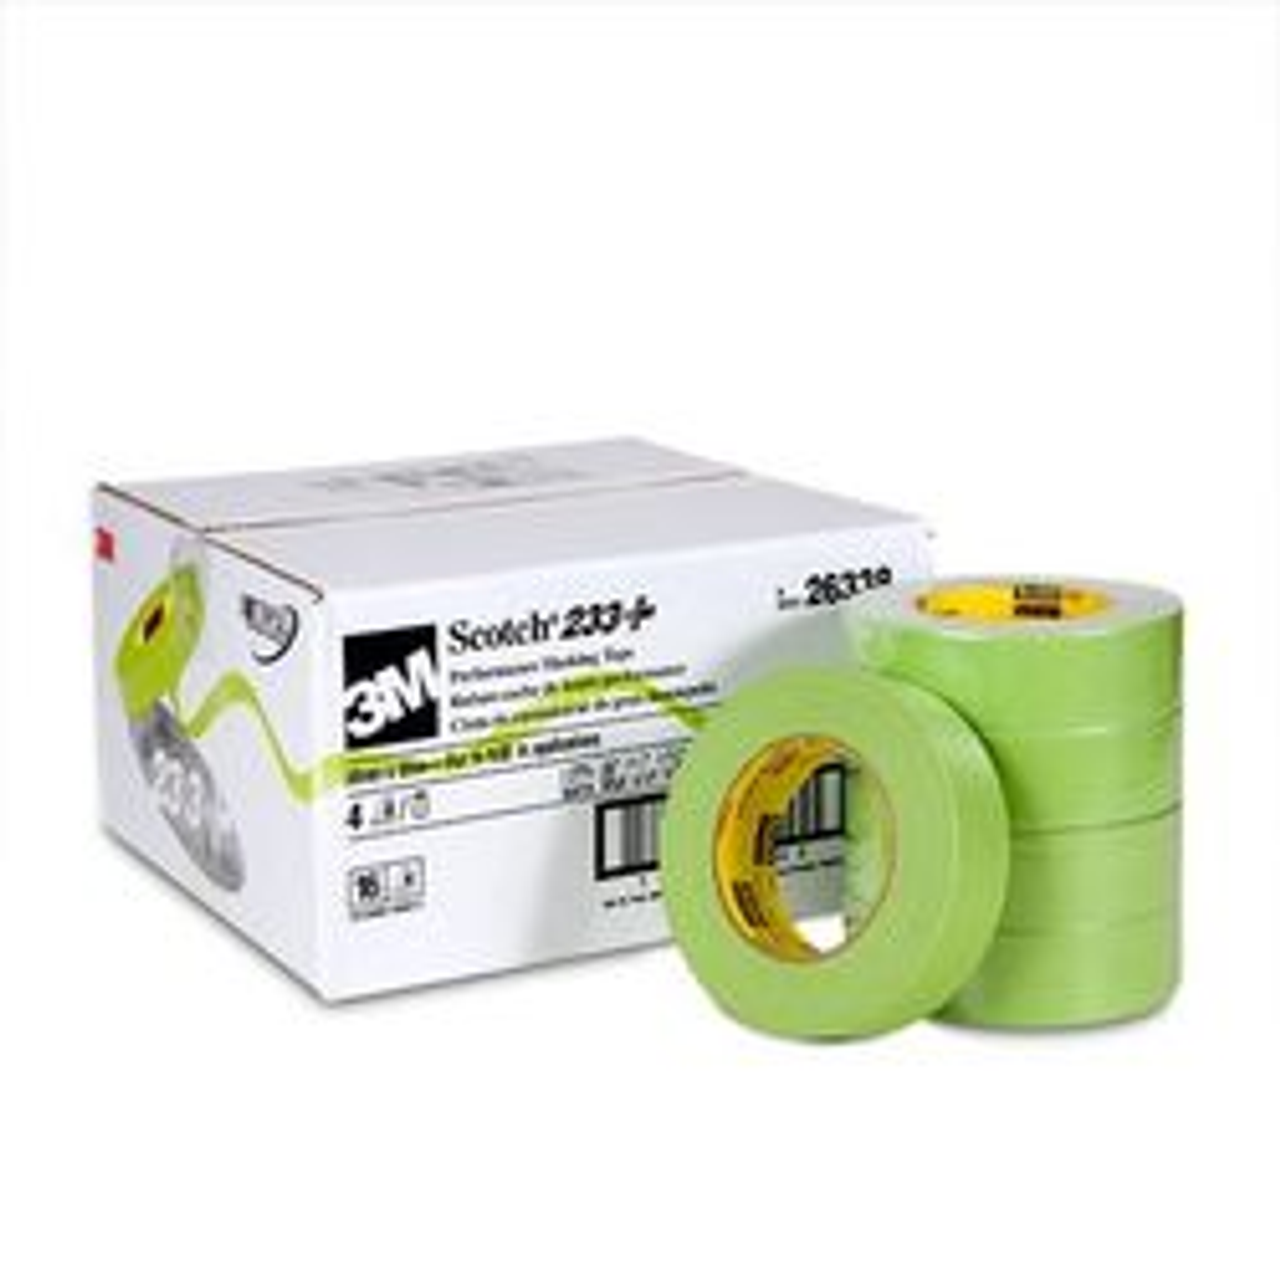 3M 26338 36mm x 55m Green Masking Tape Roll